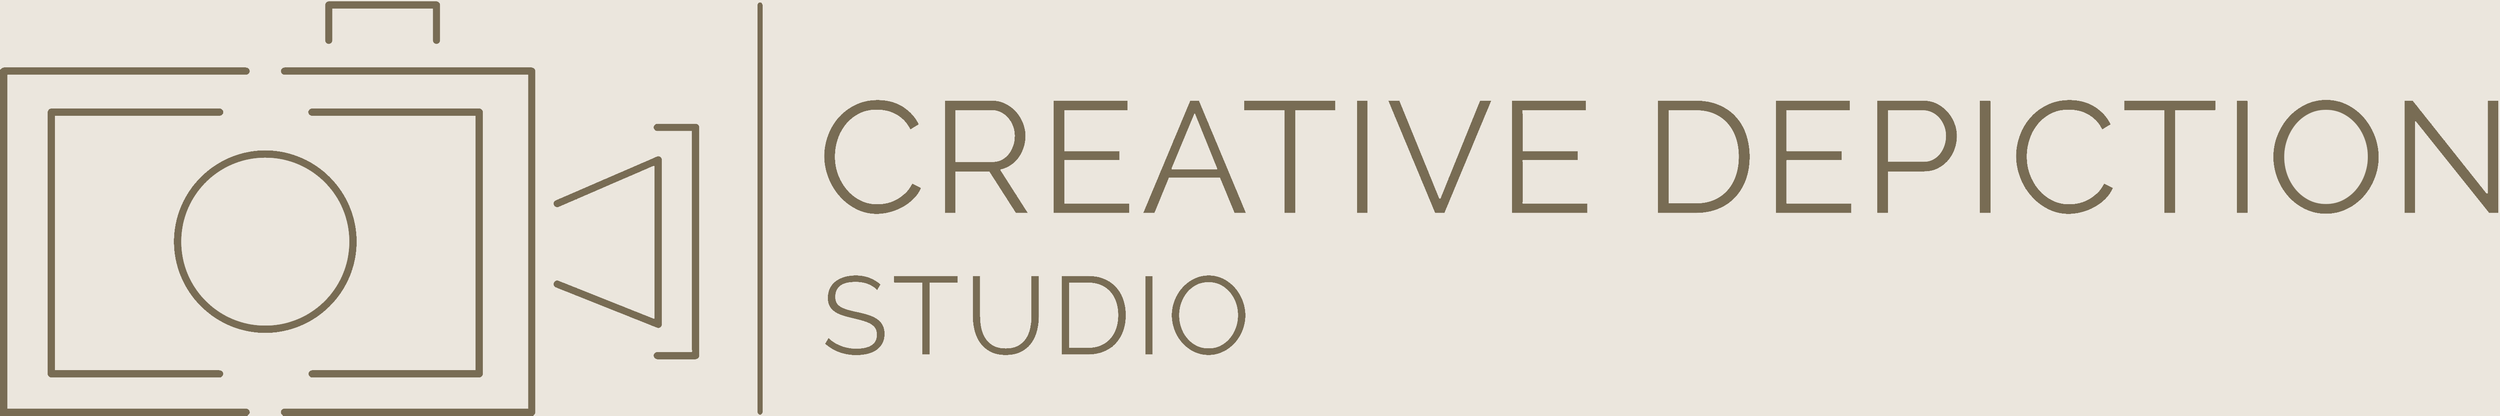 Creative Depiction Studio